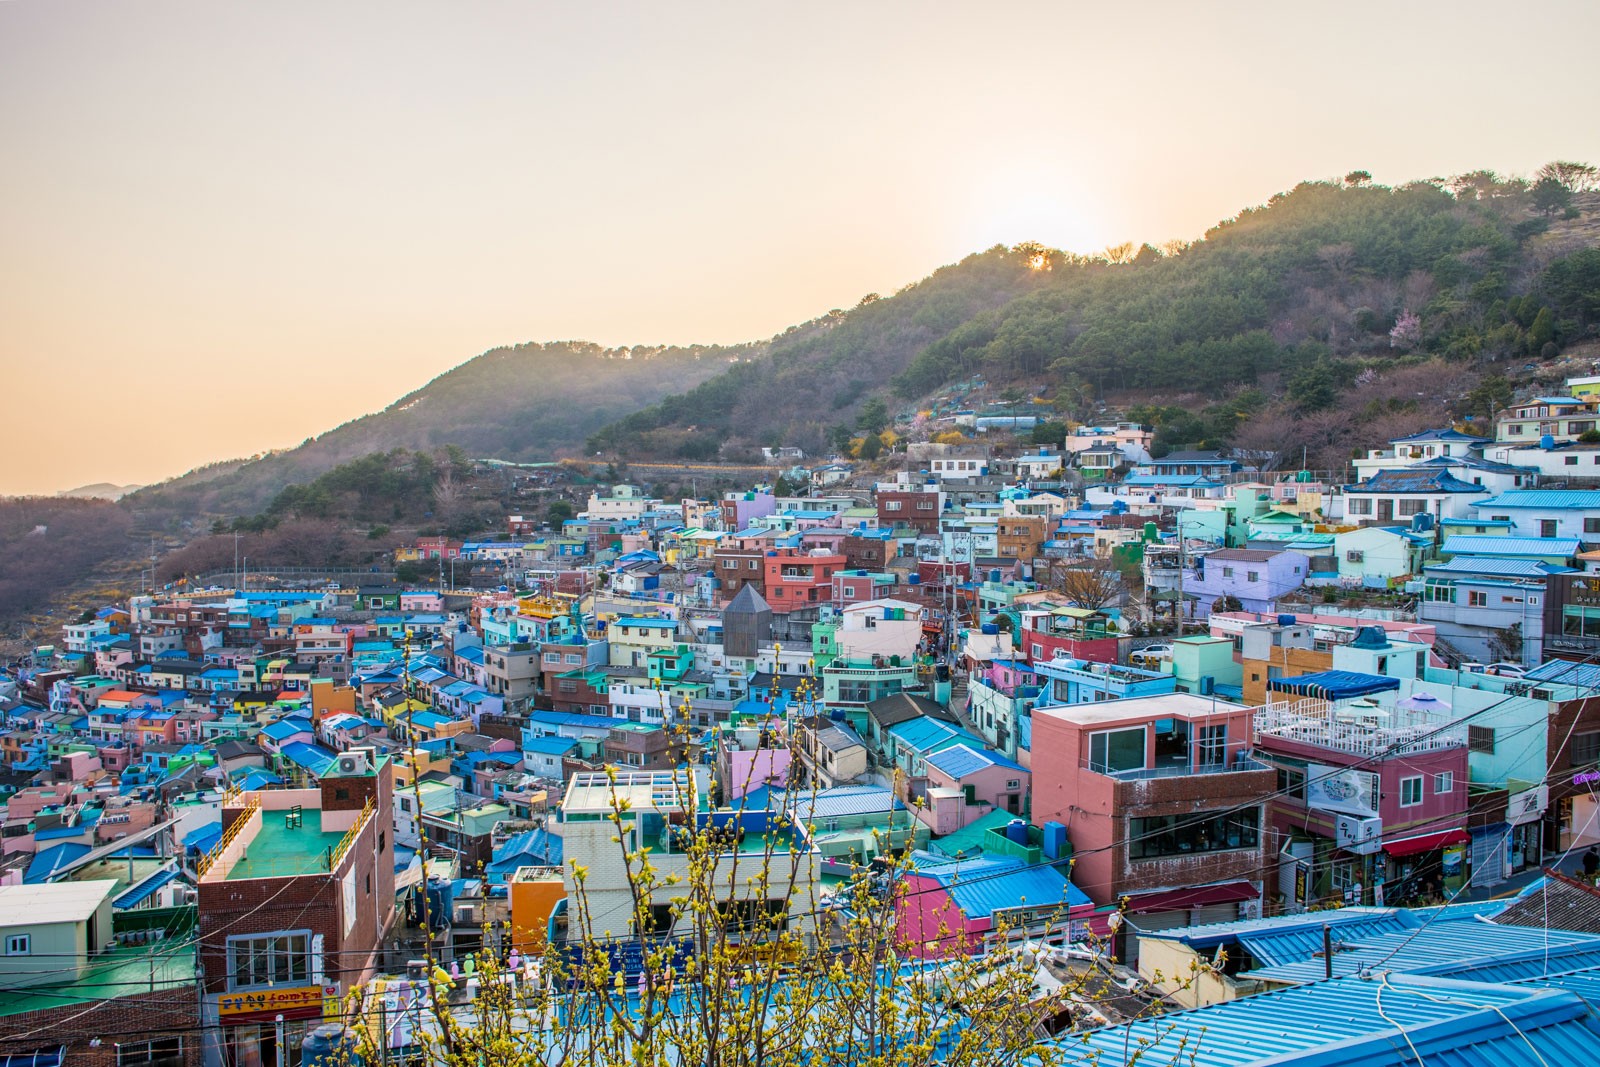 corée du sud, Gamcheon cultural village, busan, korea, visite korea, voyage, travel, decouverte, visite, street art, ninaah bulles